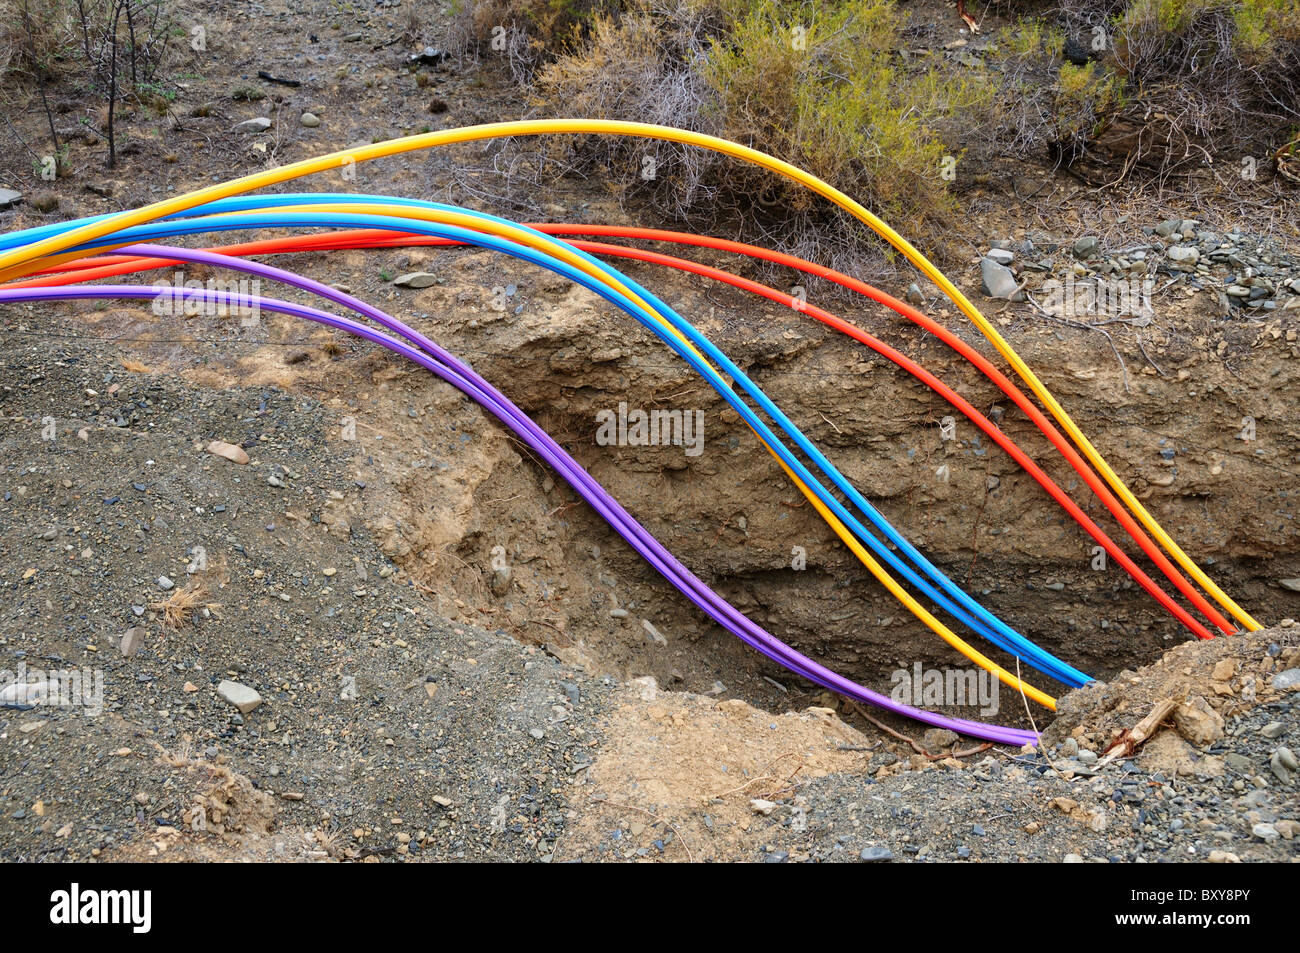 Cables enterrados fotografías e imágenes de alta resolución - Alamy